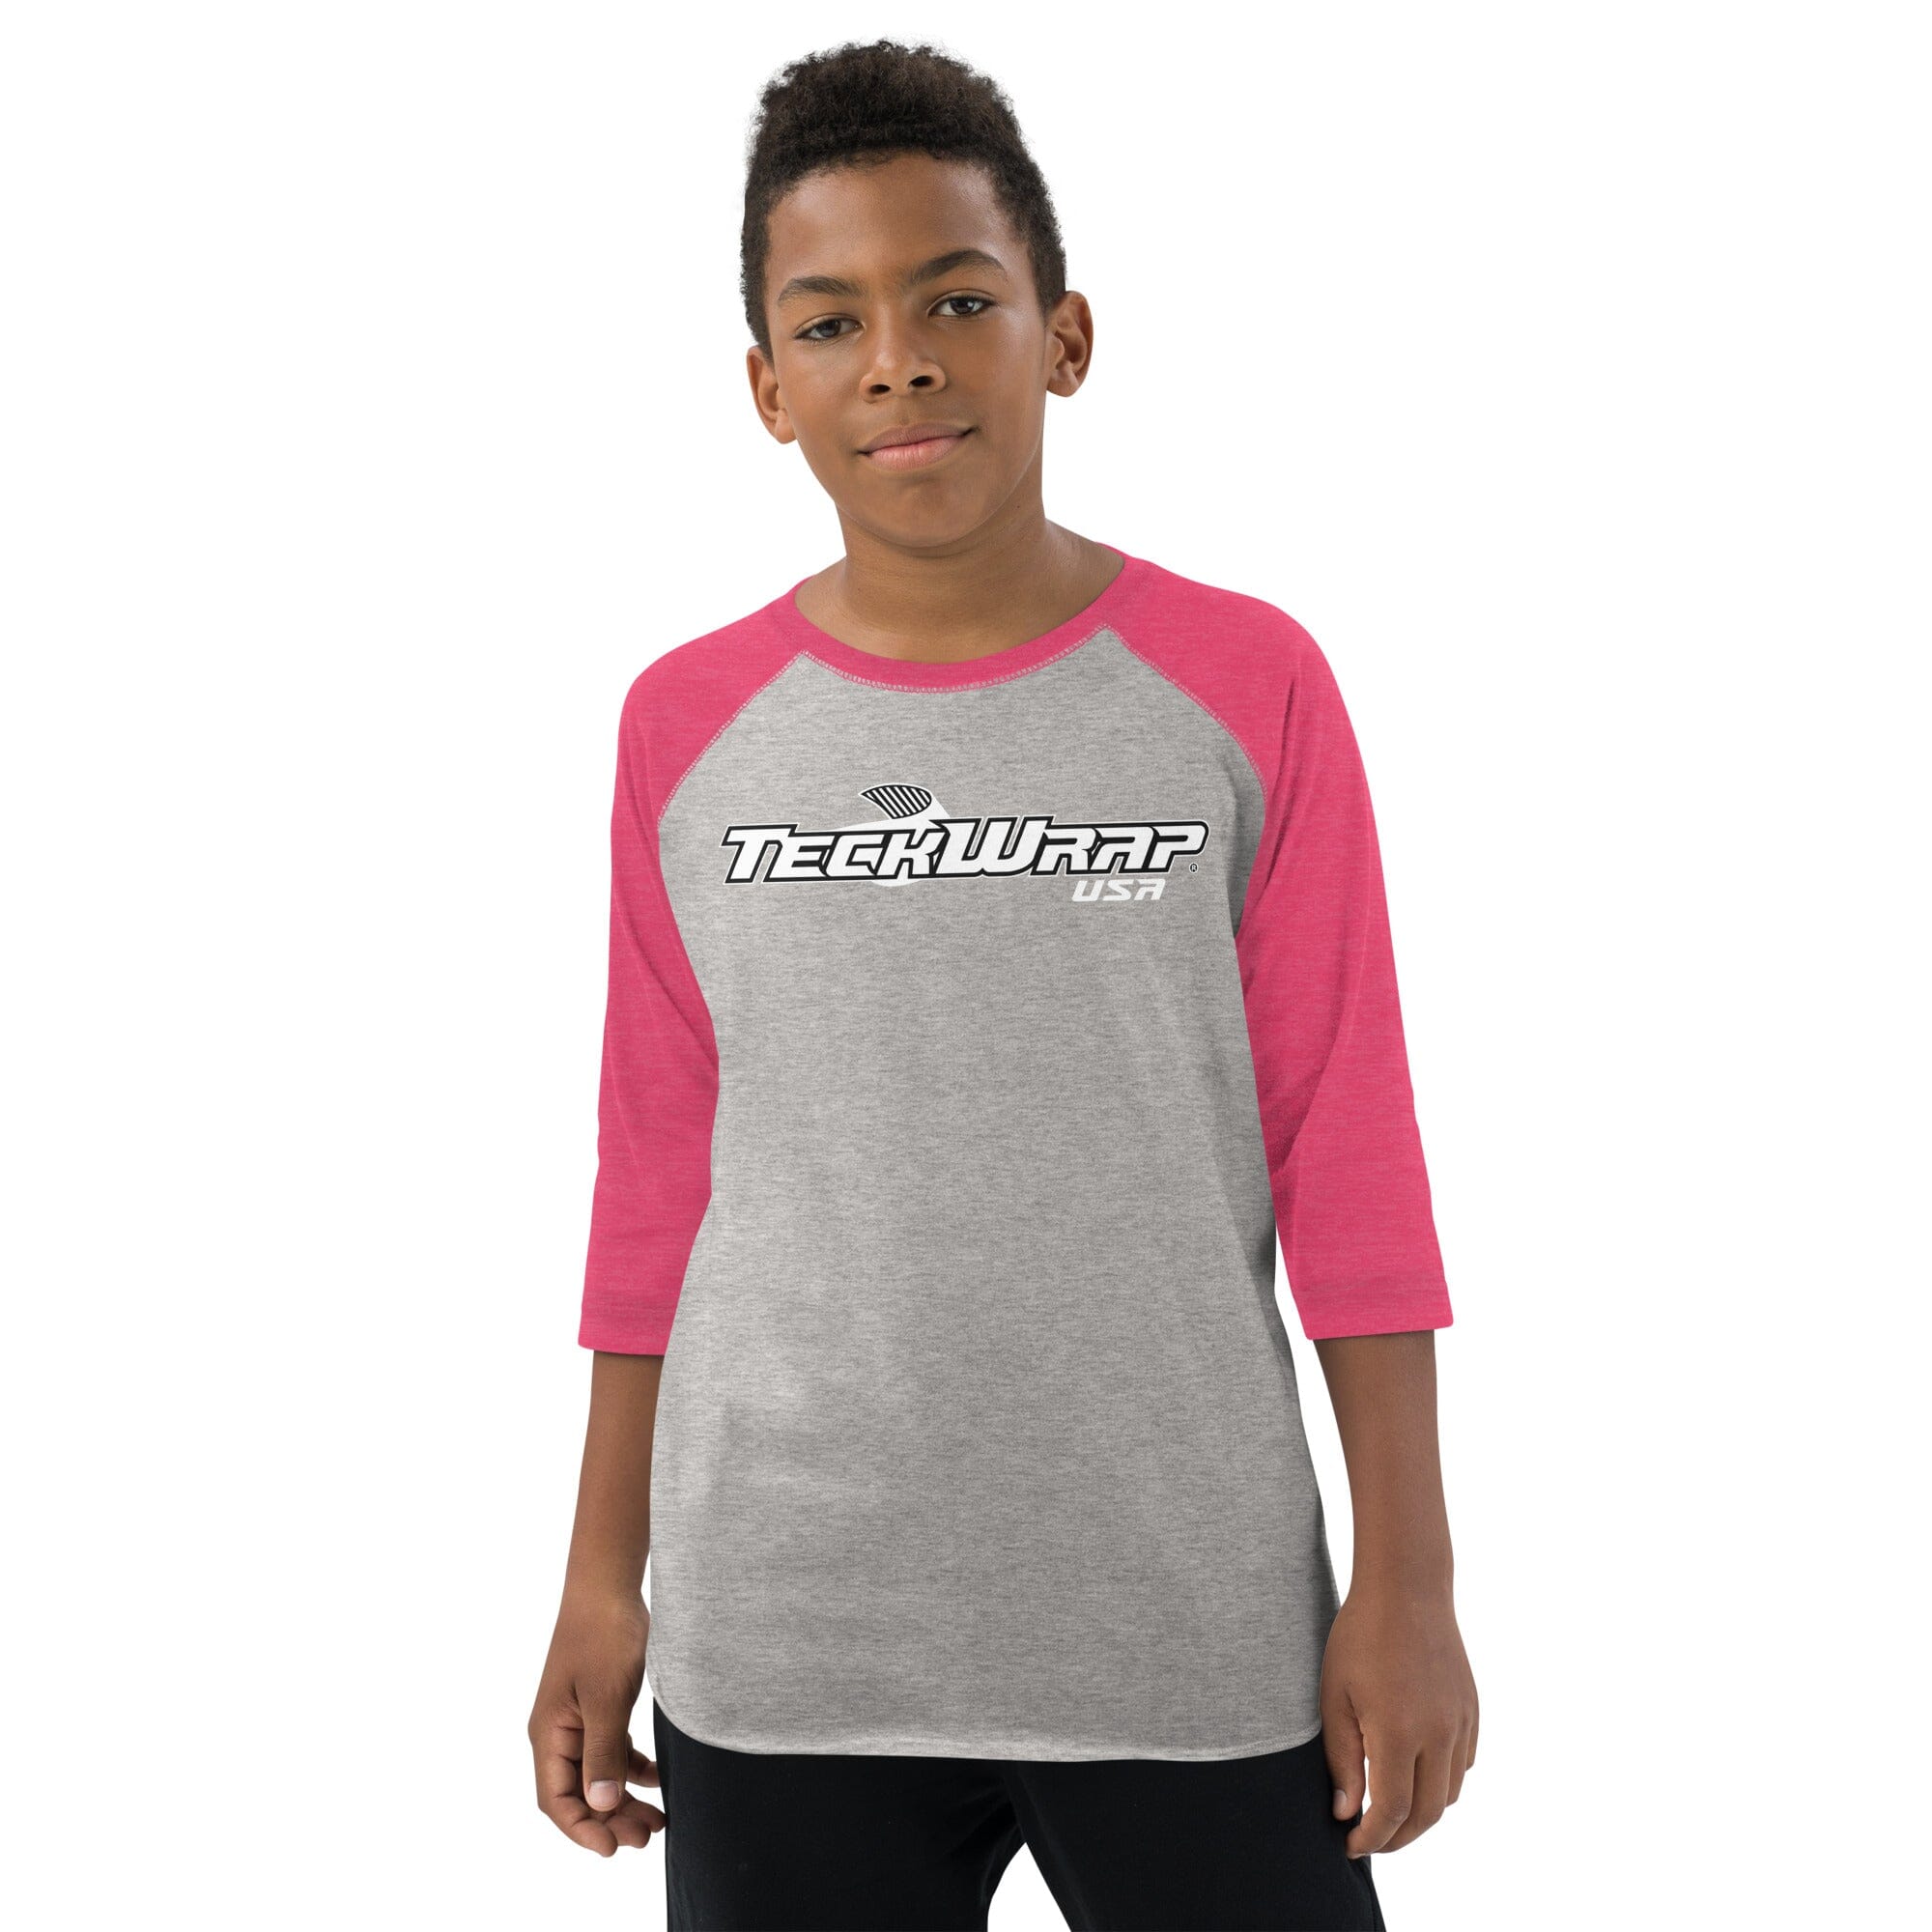 Youth baseball shirt Teckwrap USA 